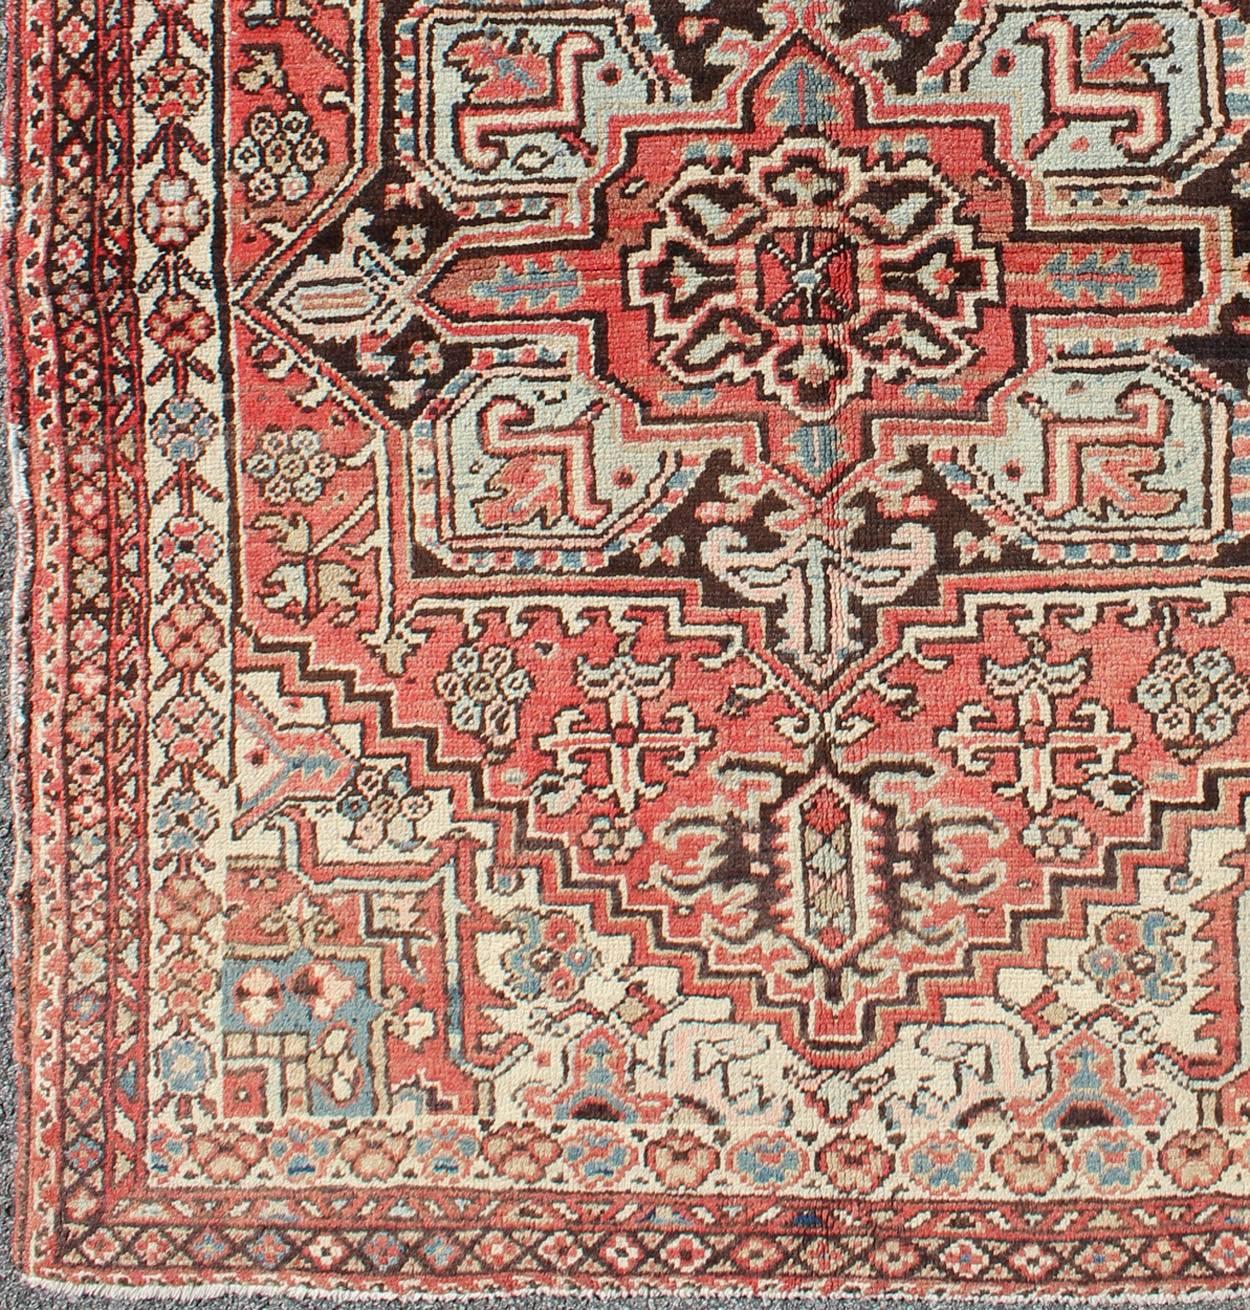 Geometric stylized antique Persian Heriz rug with medallion, circa 1930's, rug dsp-ca16194, country of origin / type: Iran / Heriz Serapi, circa 1930.

This Squarish Size antique Persian Heriz carpet from the second quarter of 20th century (circa